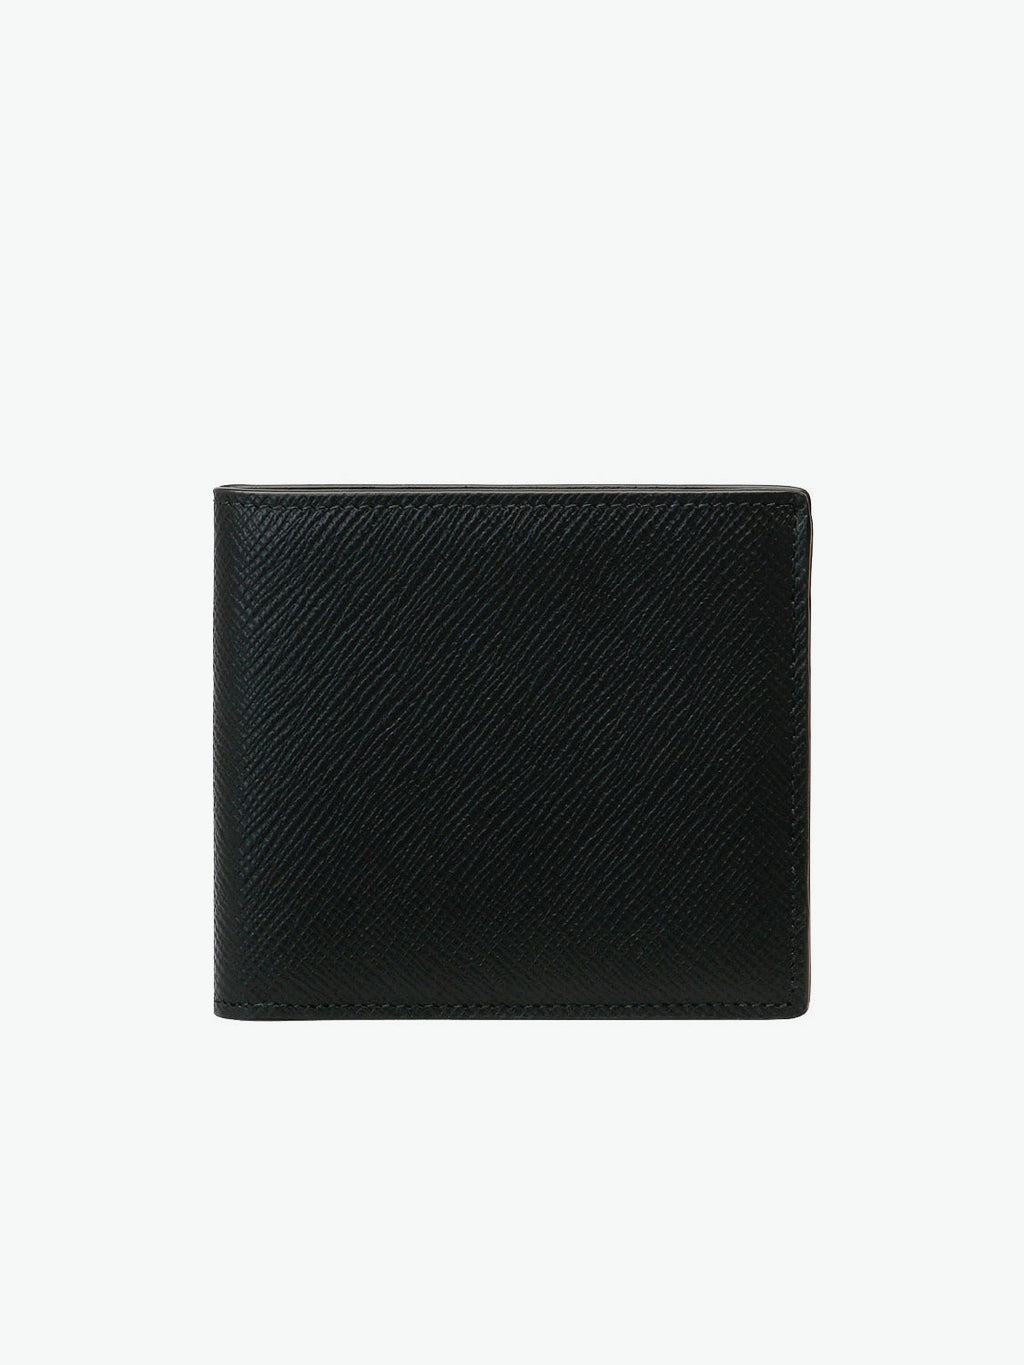 Smythson Panama Cross-Grain Leather Card Slot Wallet Black | A